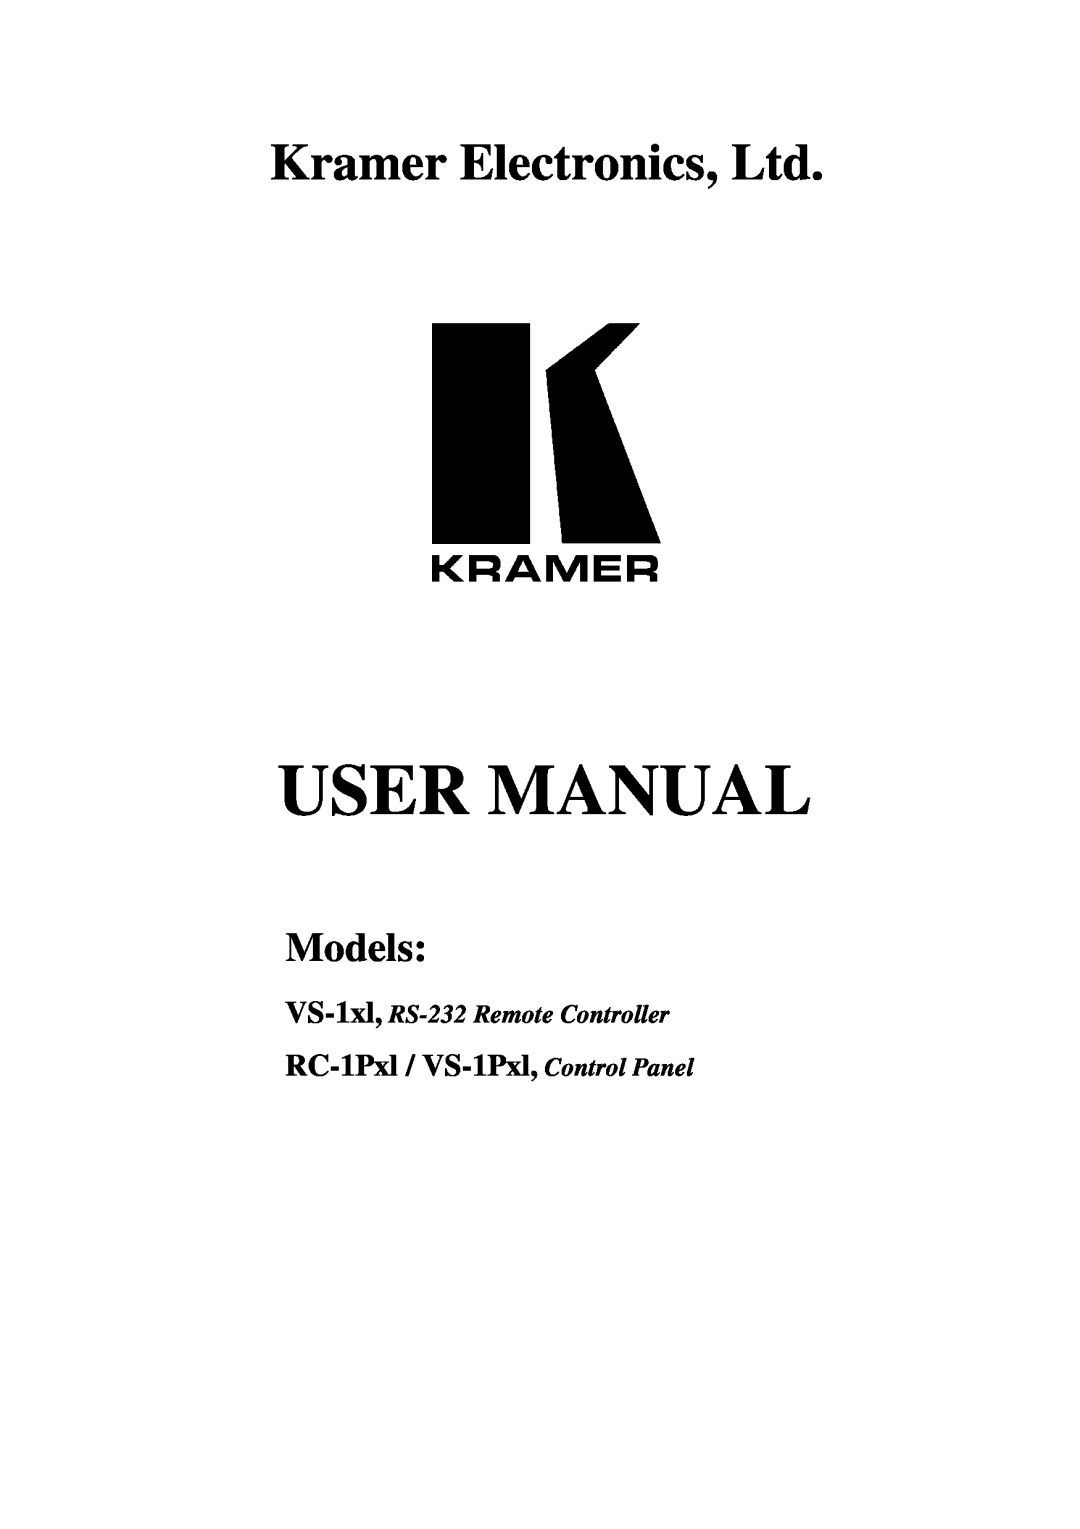 Kramer Electronics vs-1x1 user manual User Manual, Models, RC-1Pxl / VS-1Pxl, Control Panel 